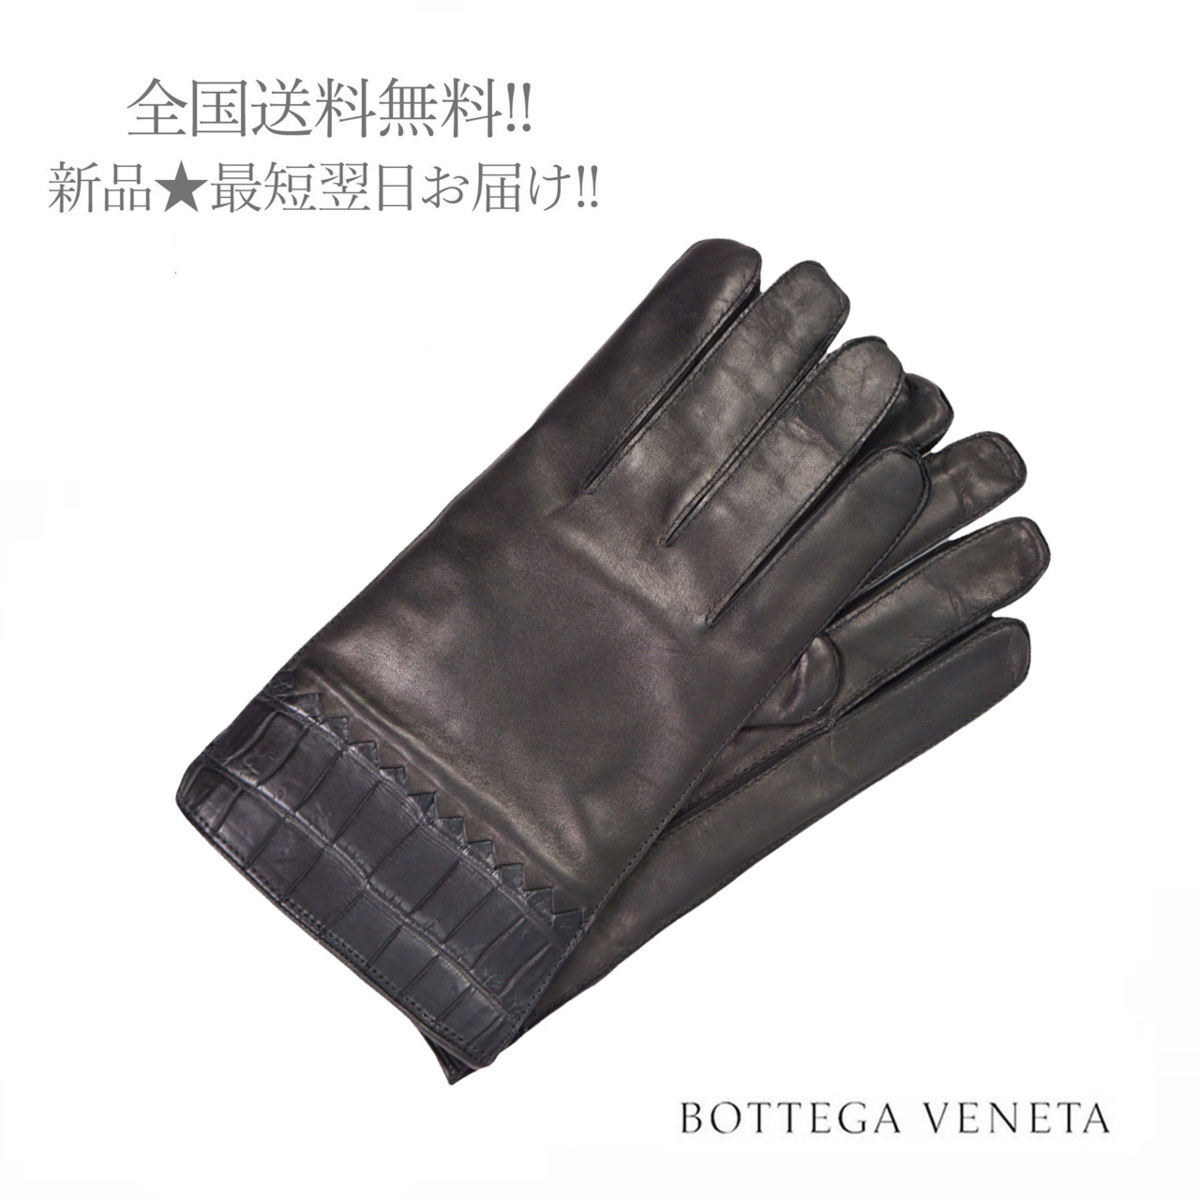 I487(9).. BOTTEGA VENETA ボッテガ ヴェネタ 最高級 手袋 グローブ ナッパ+リアルクロコ カシミア イタリア製 新品 ★ 1000 ブラック